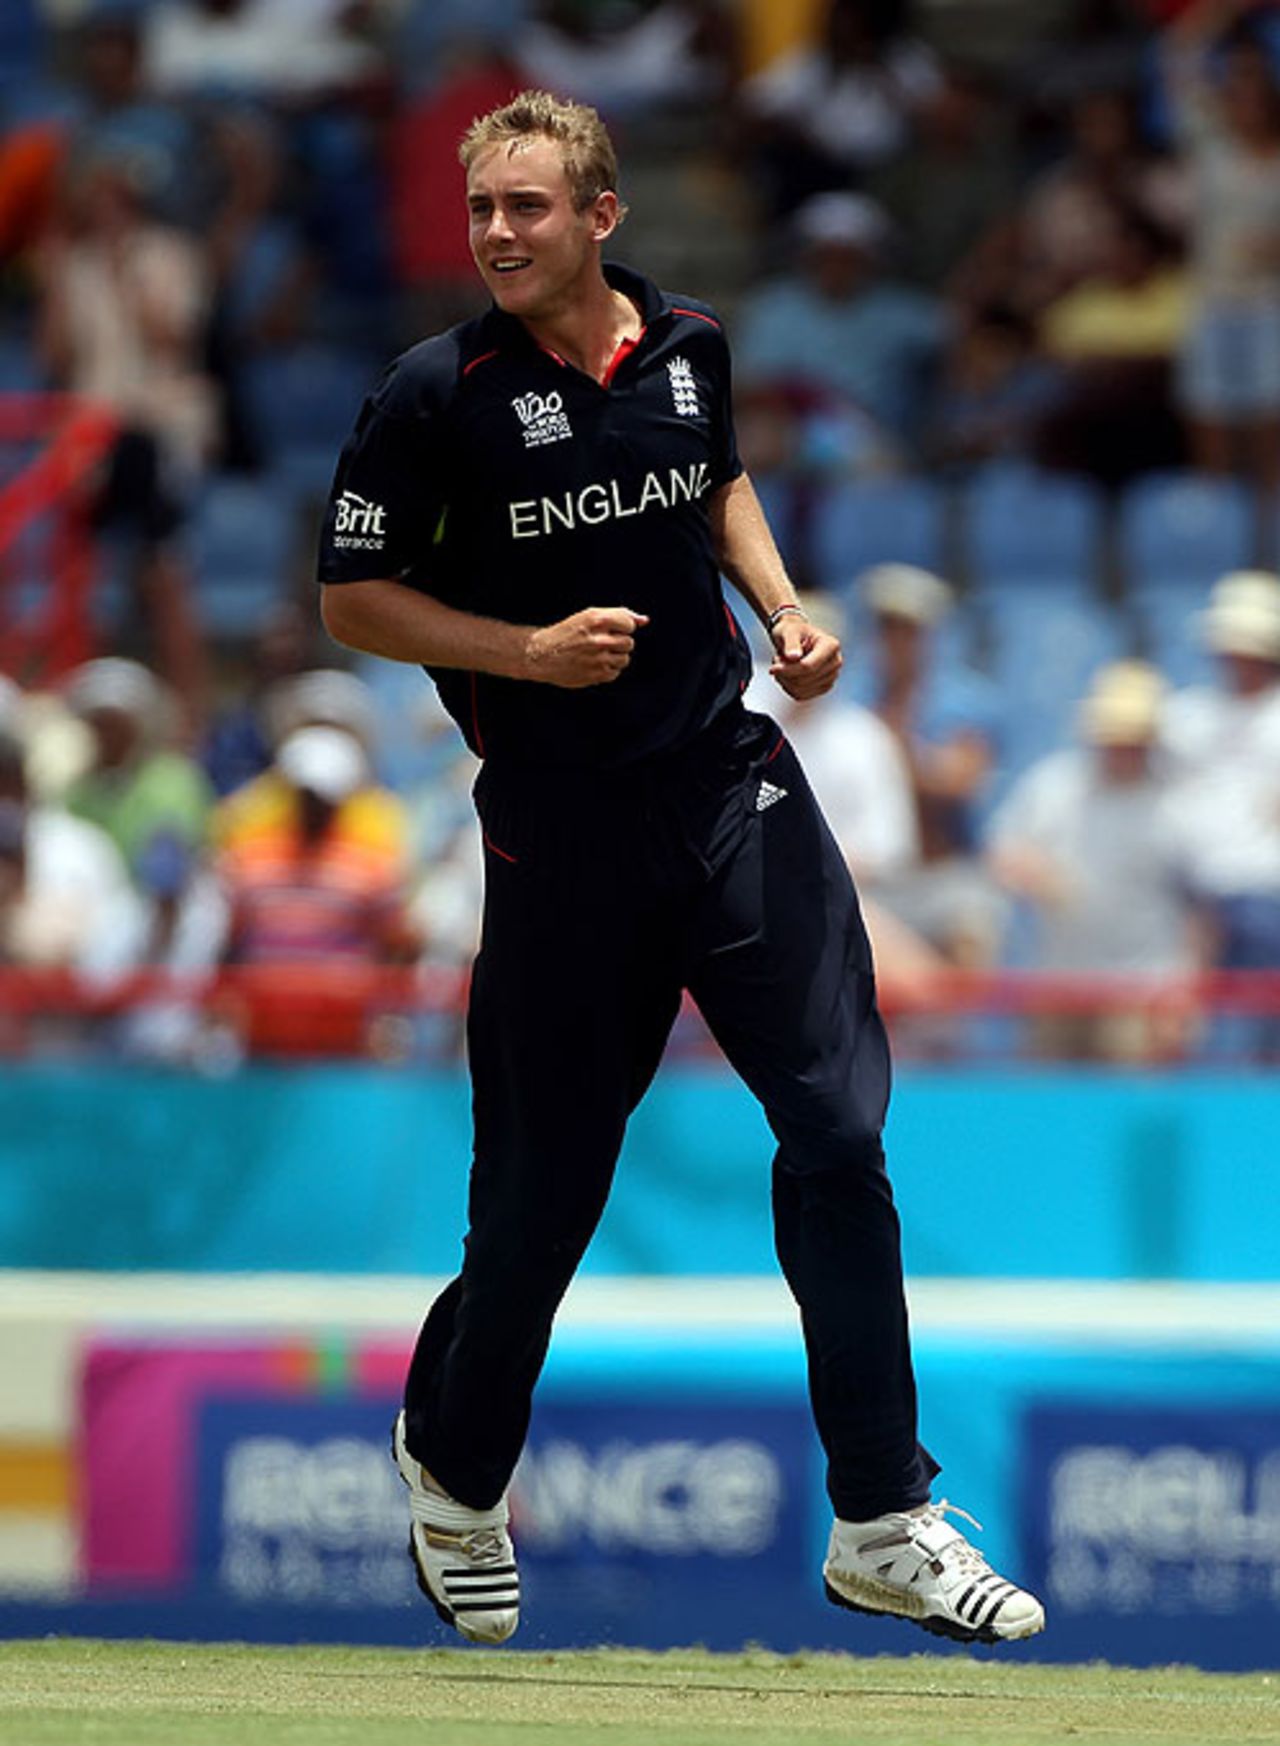 Stuart Broad dismissed Mahela Jayawardene with the first ball of his spell, England v Sri Lanka, World Twenty20, 1st Semi-Final, Gros Islet, May 13, 2010 